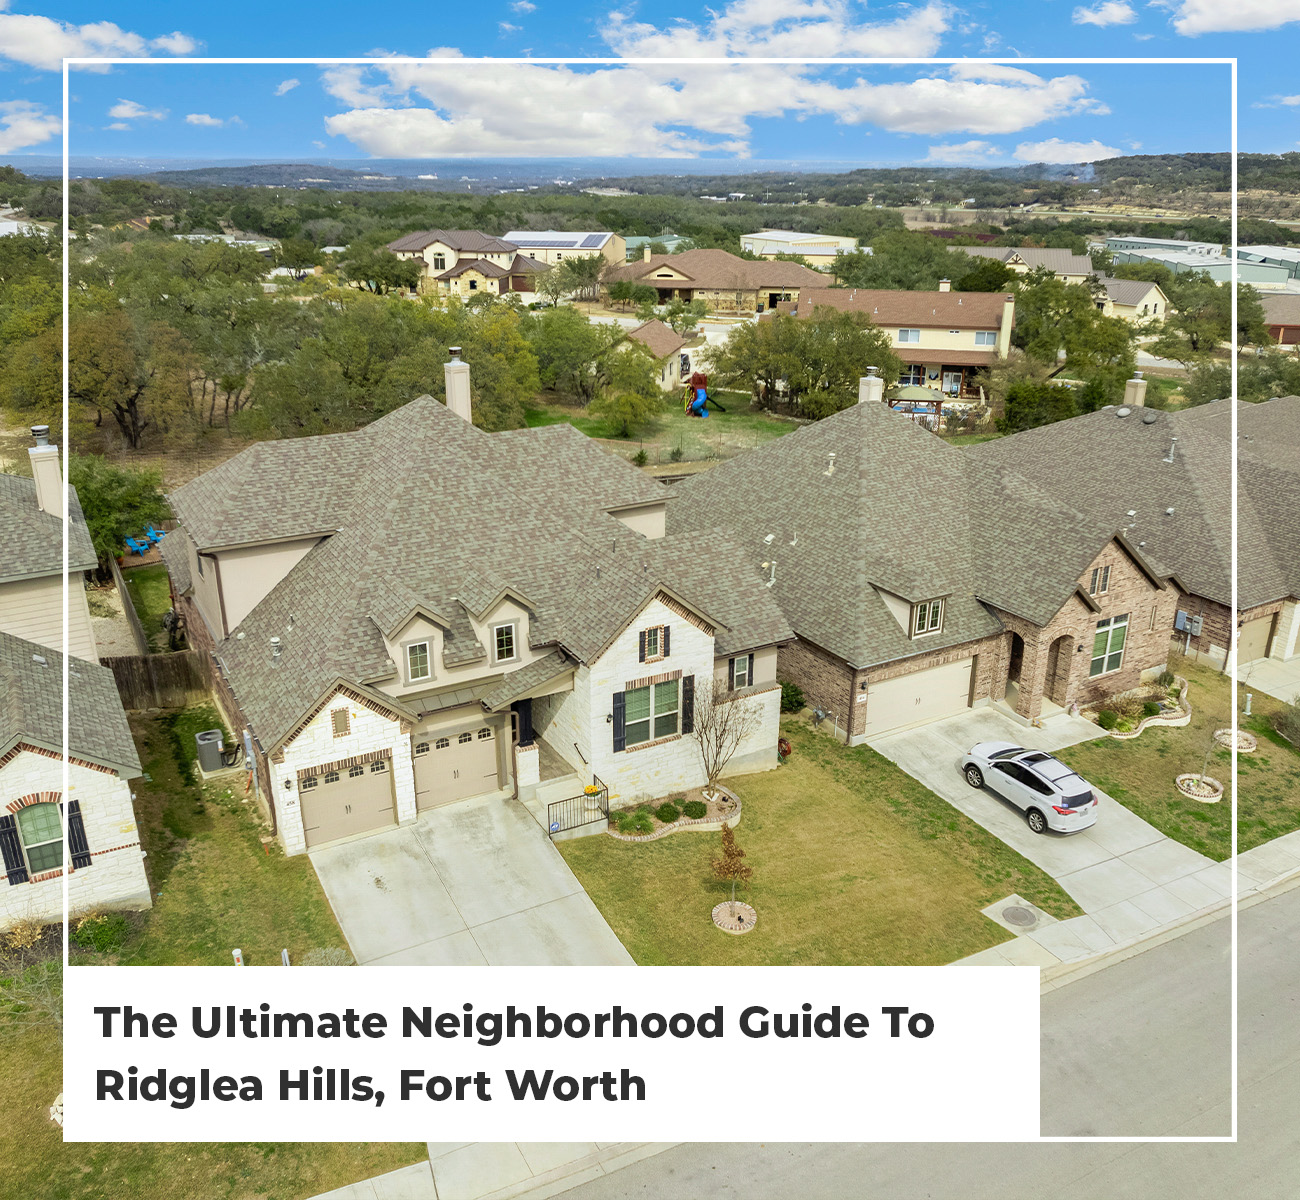 The Ultimate Neighborhood Guide To Ridglea Hills, Fort Worth